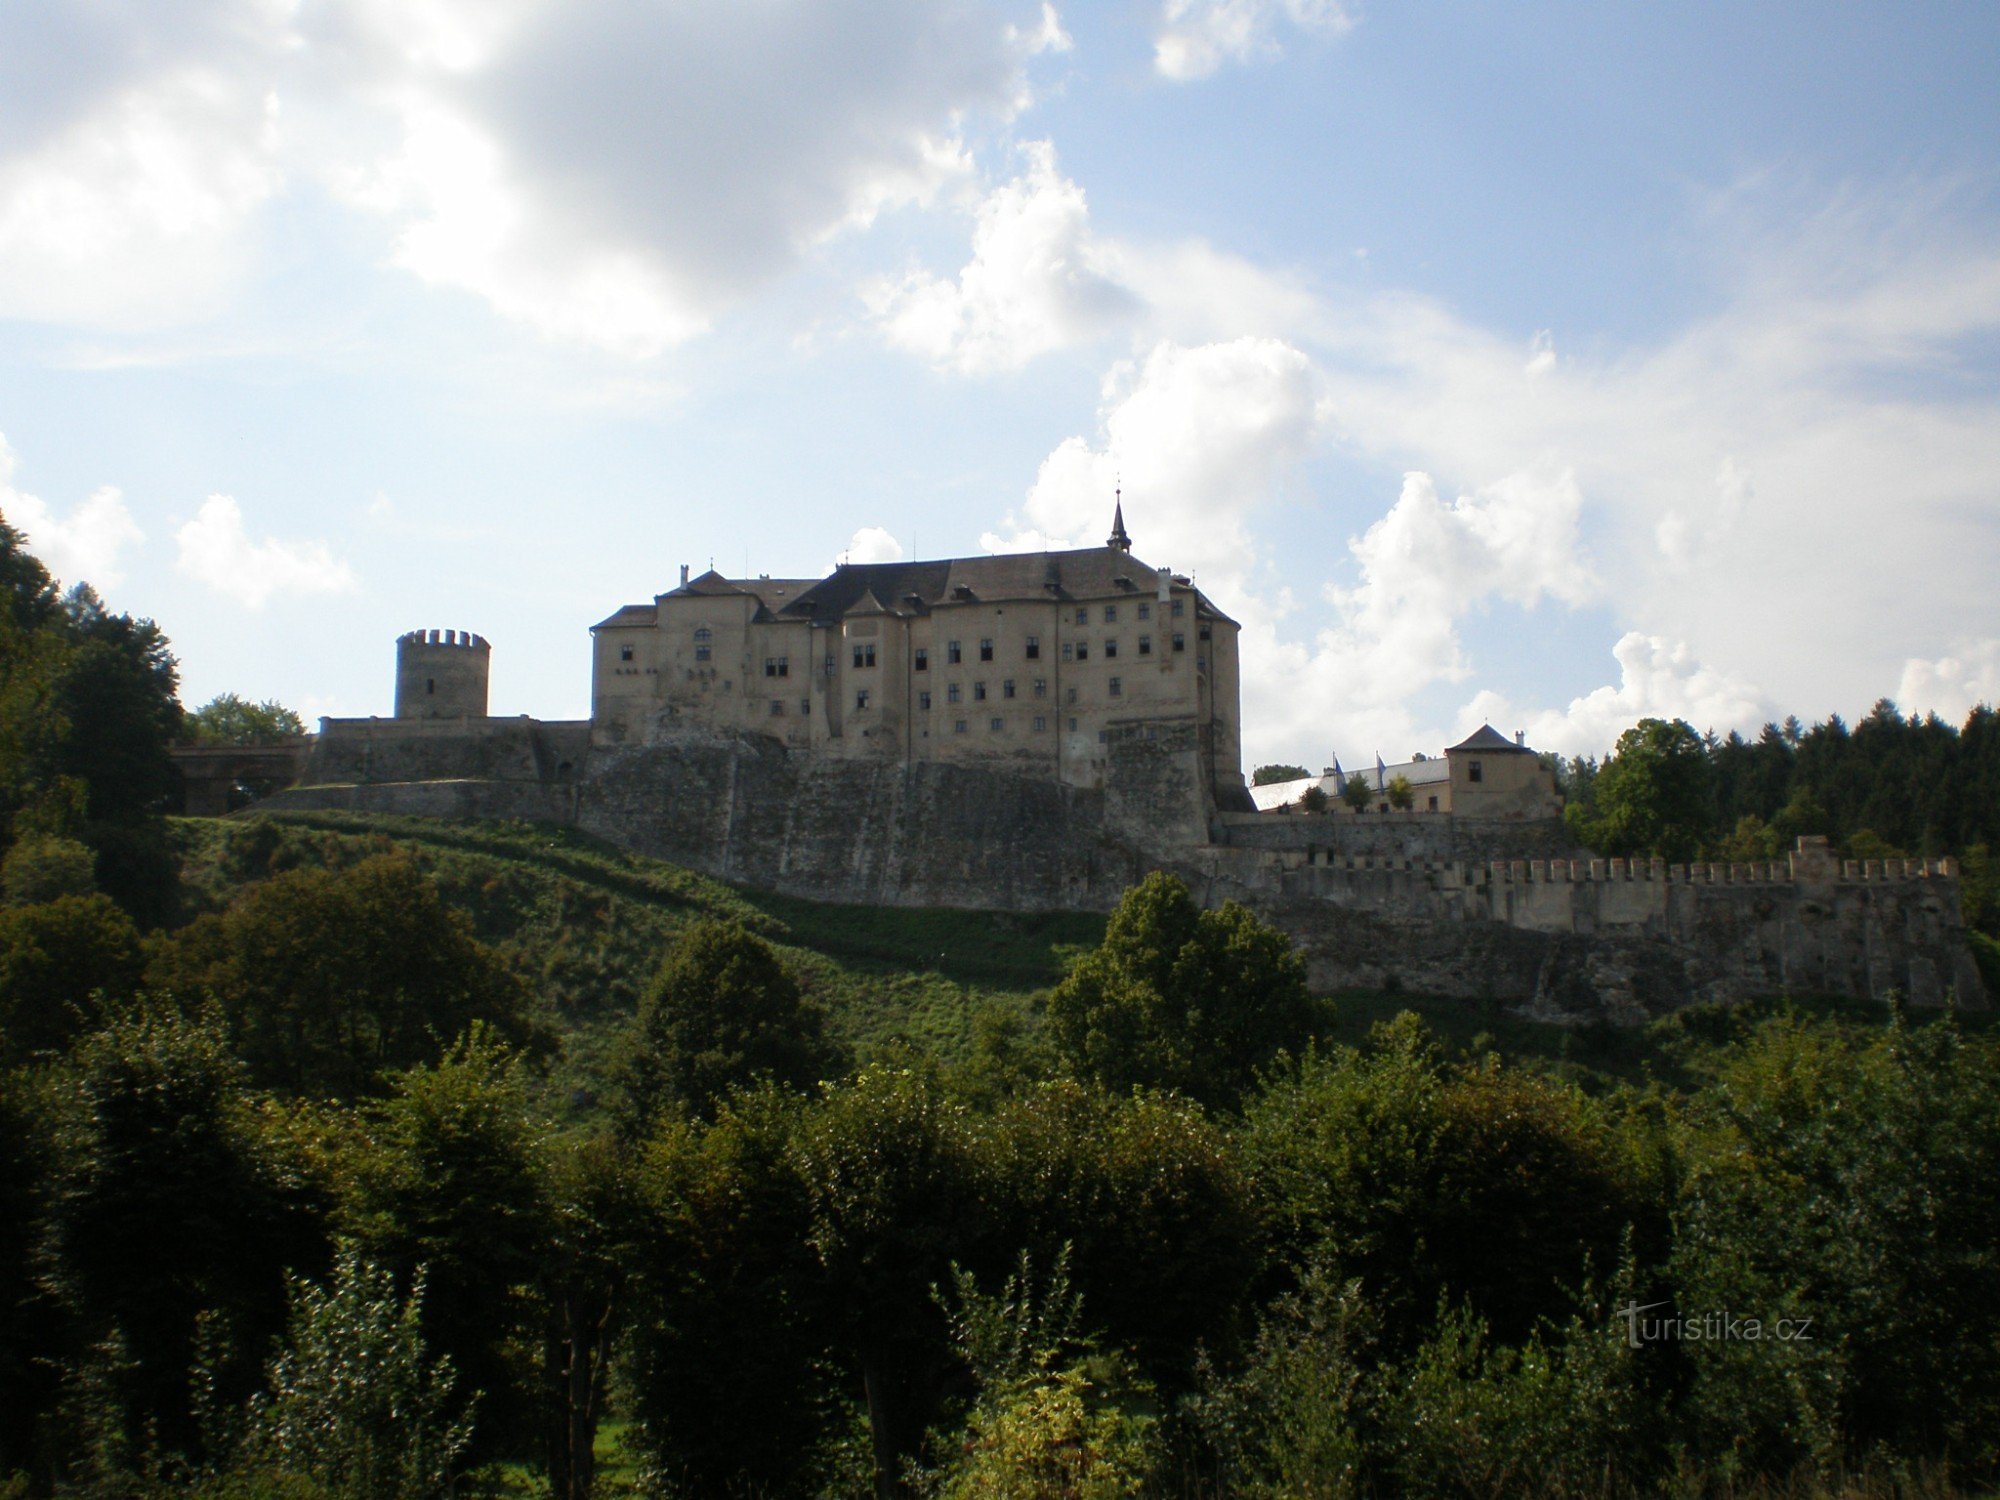 Český Šternberk - view of the castle from the railway station